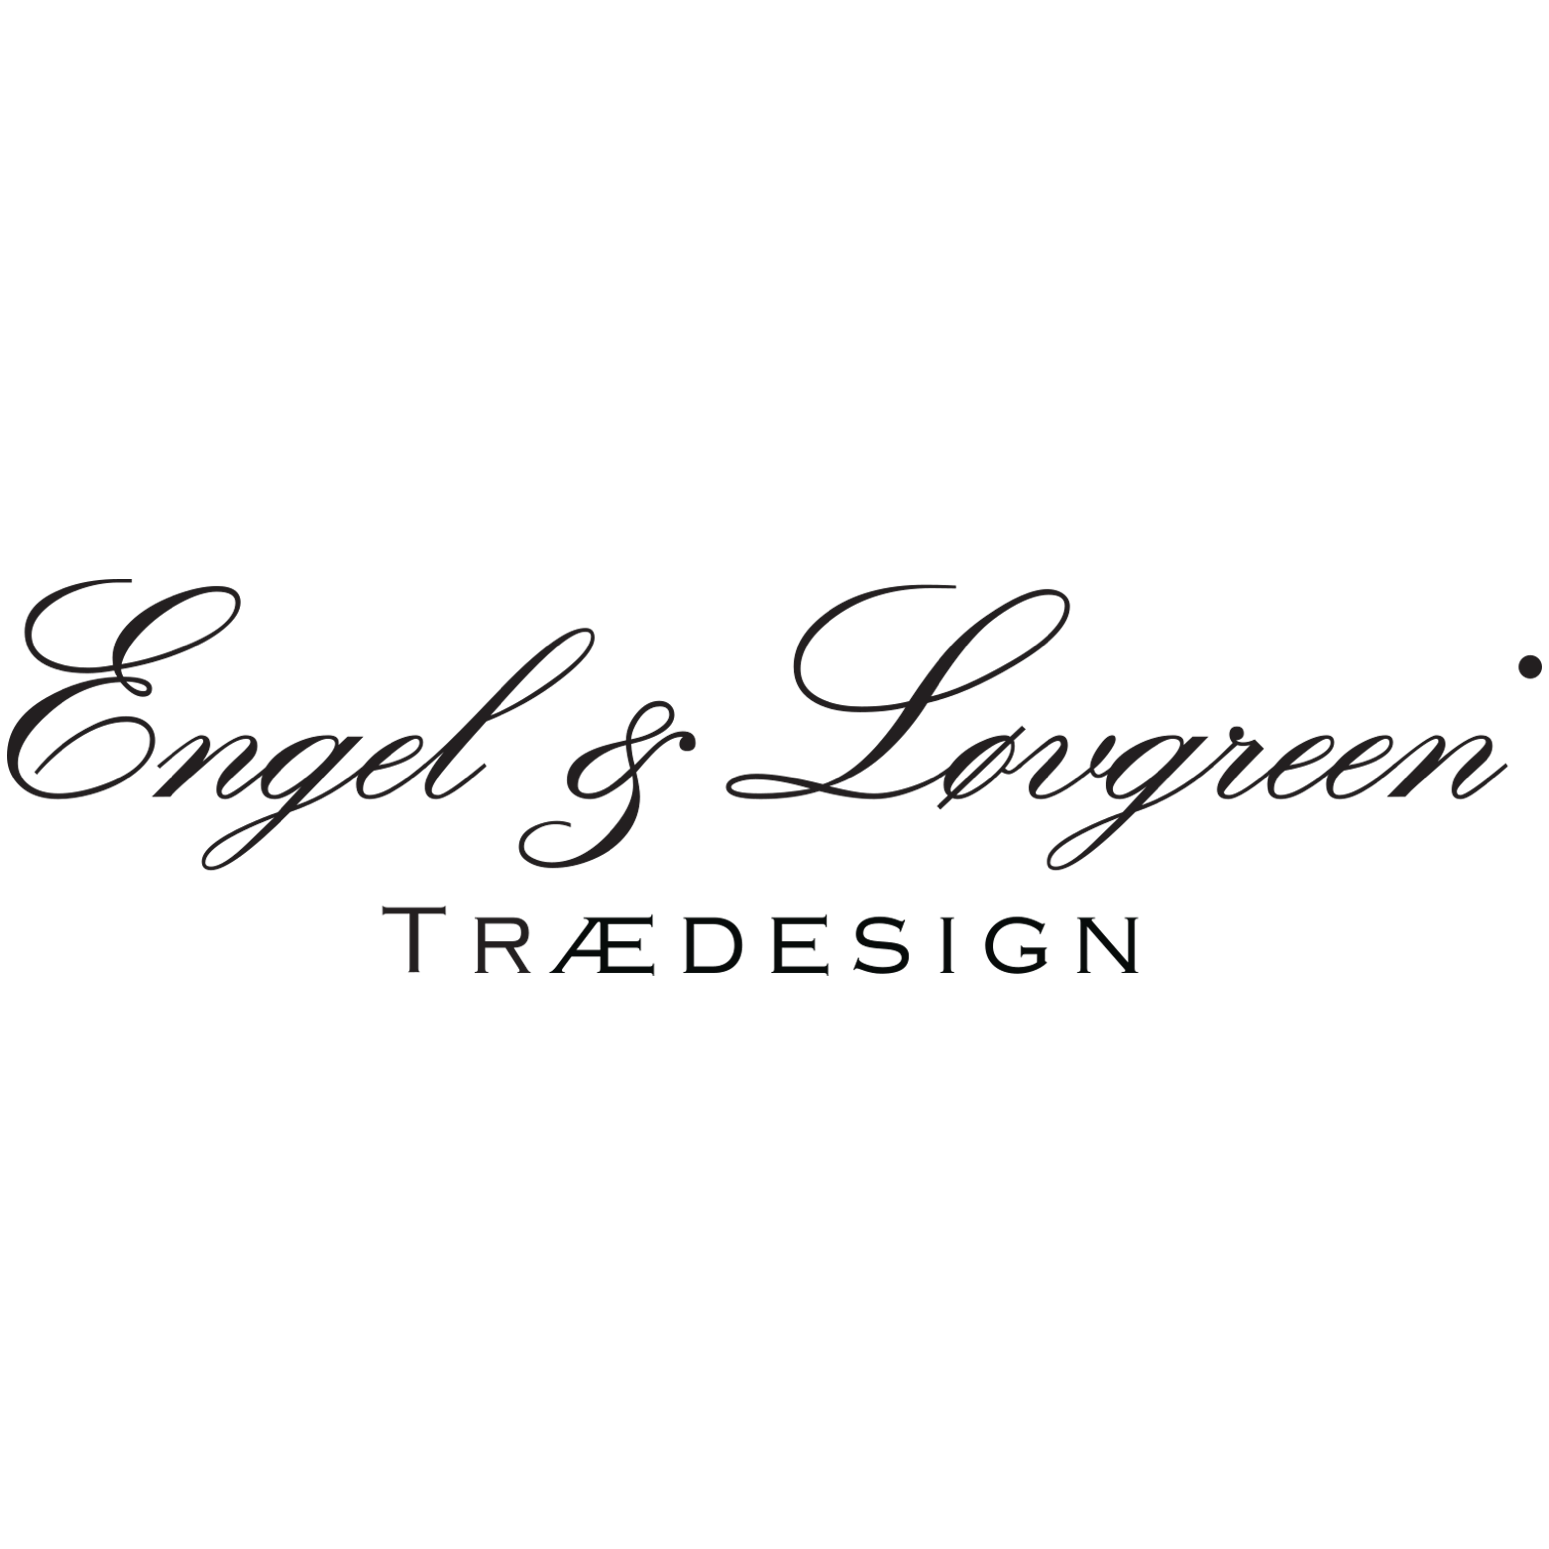 Engel & Lovgreen Trædesign